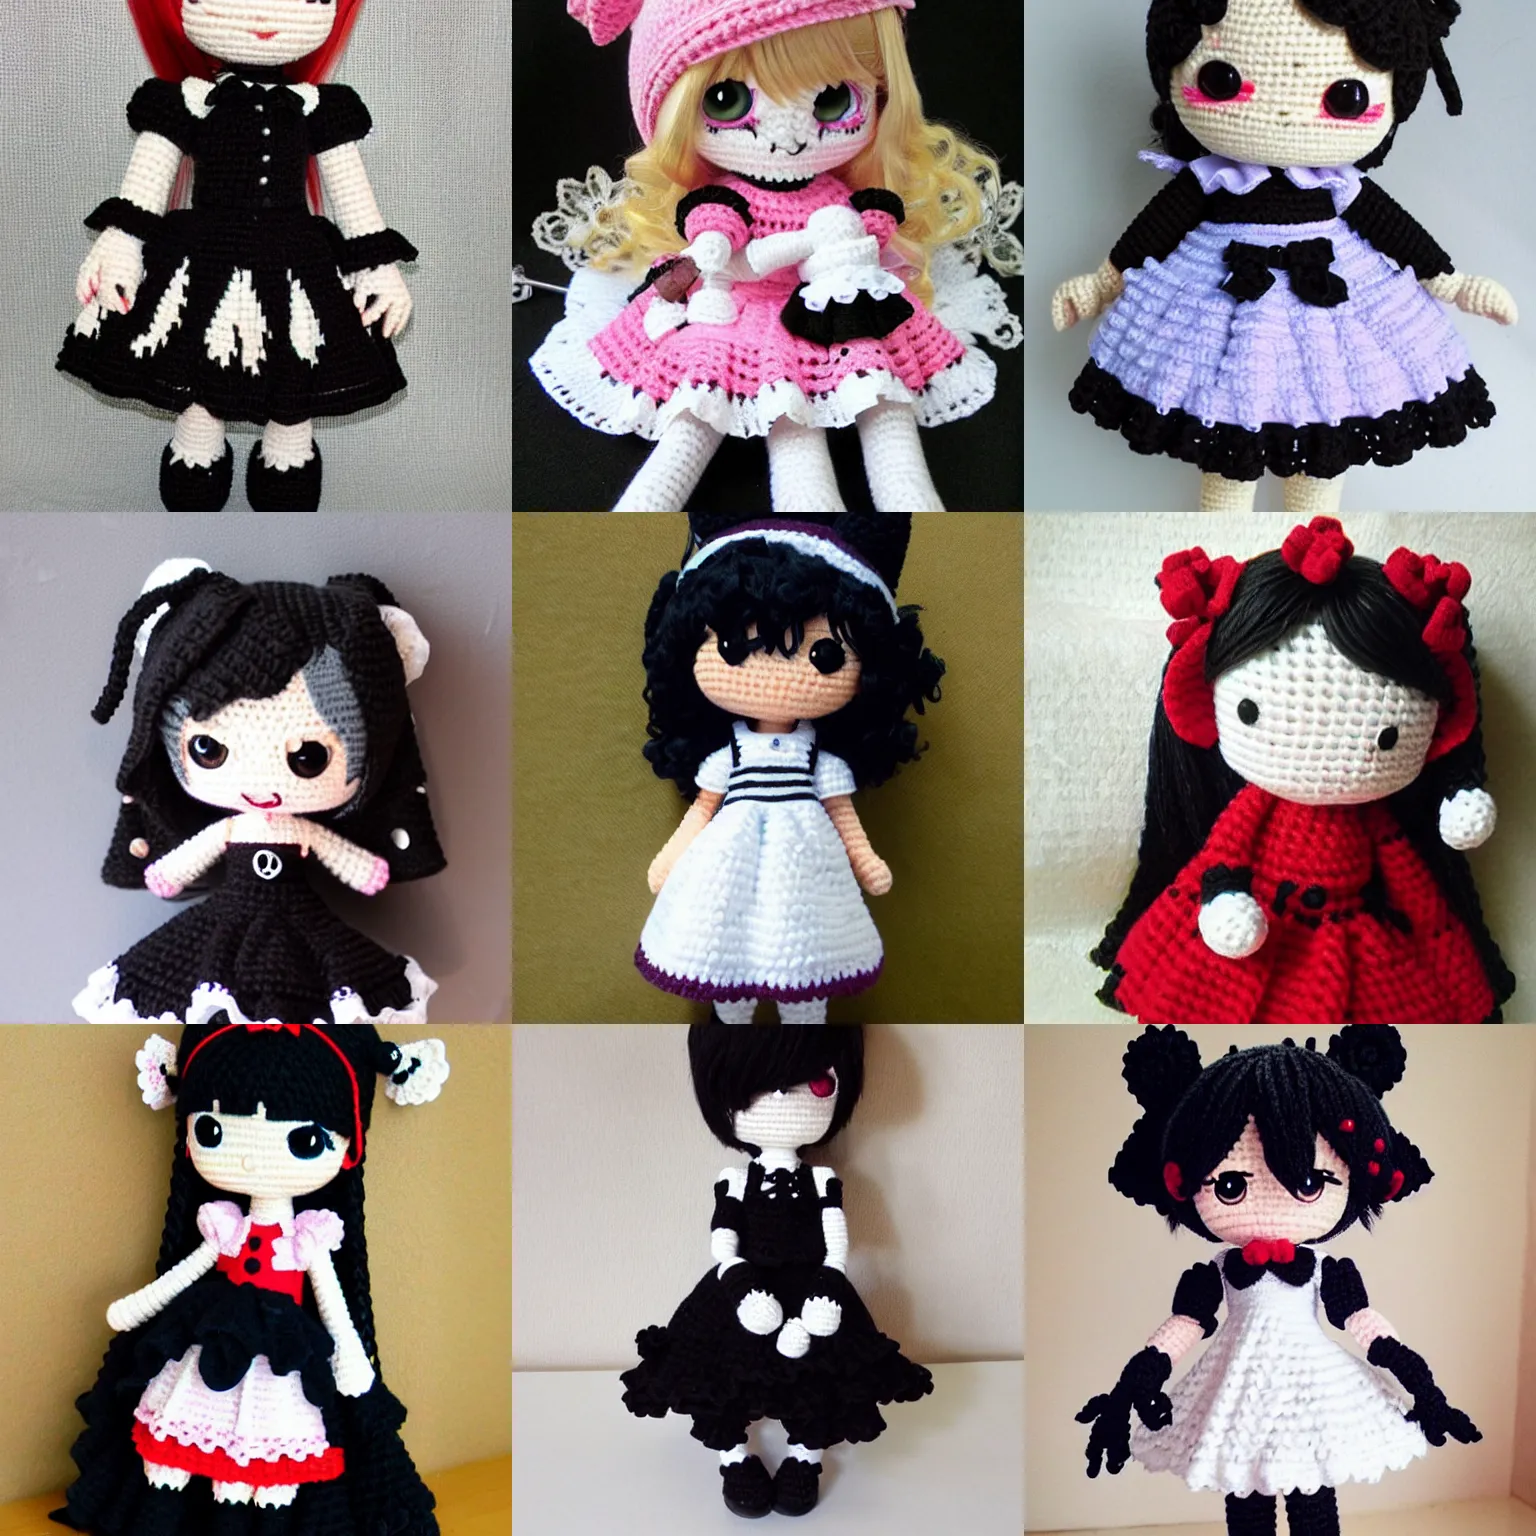 Prompt: amigurumi anime girl wearing gothic lolita dress, etsy